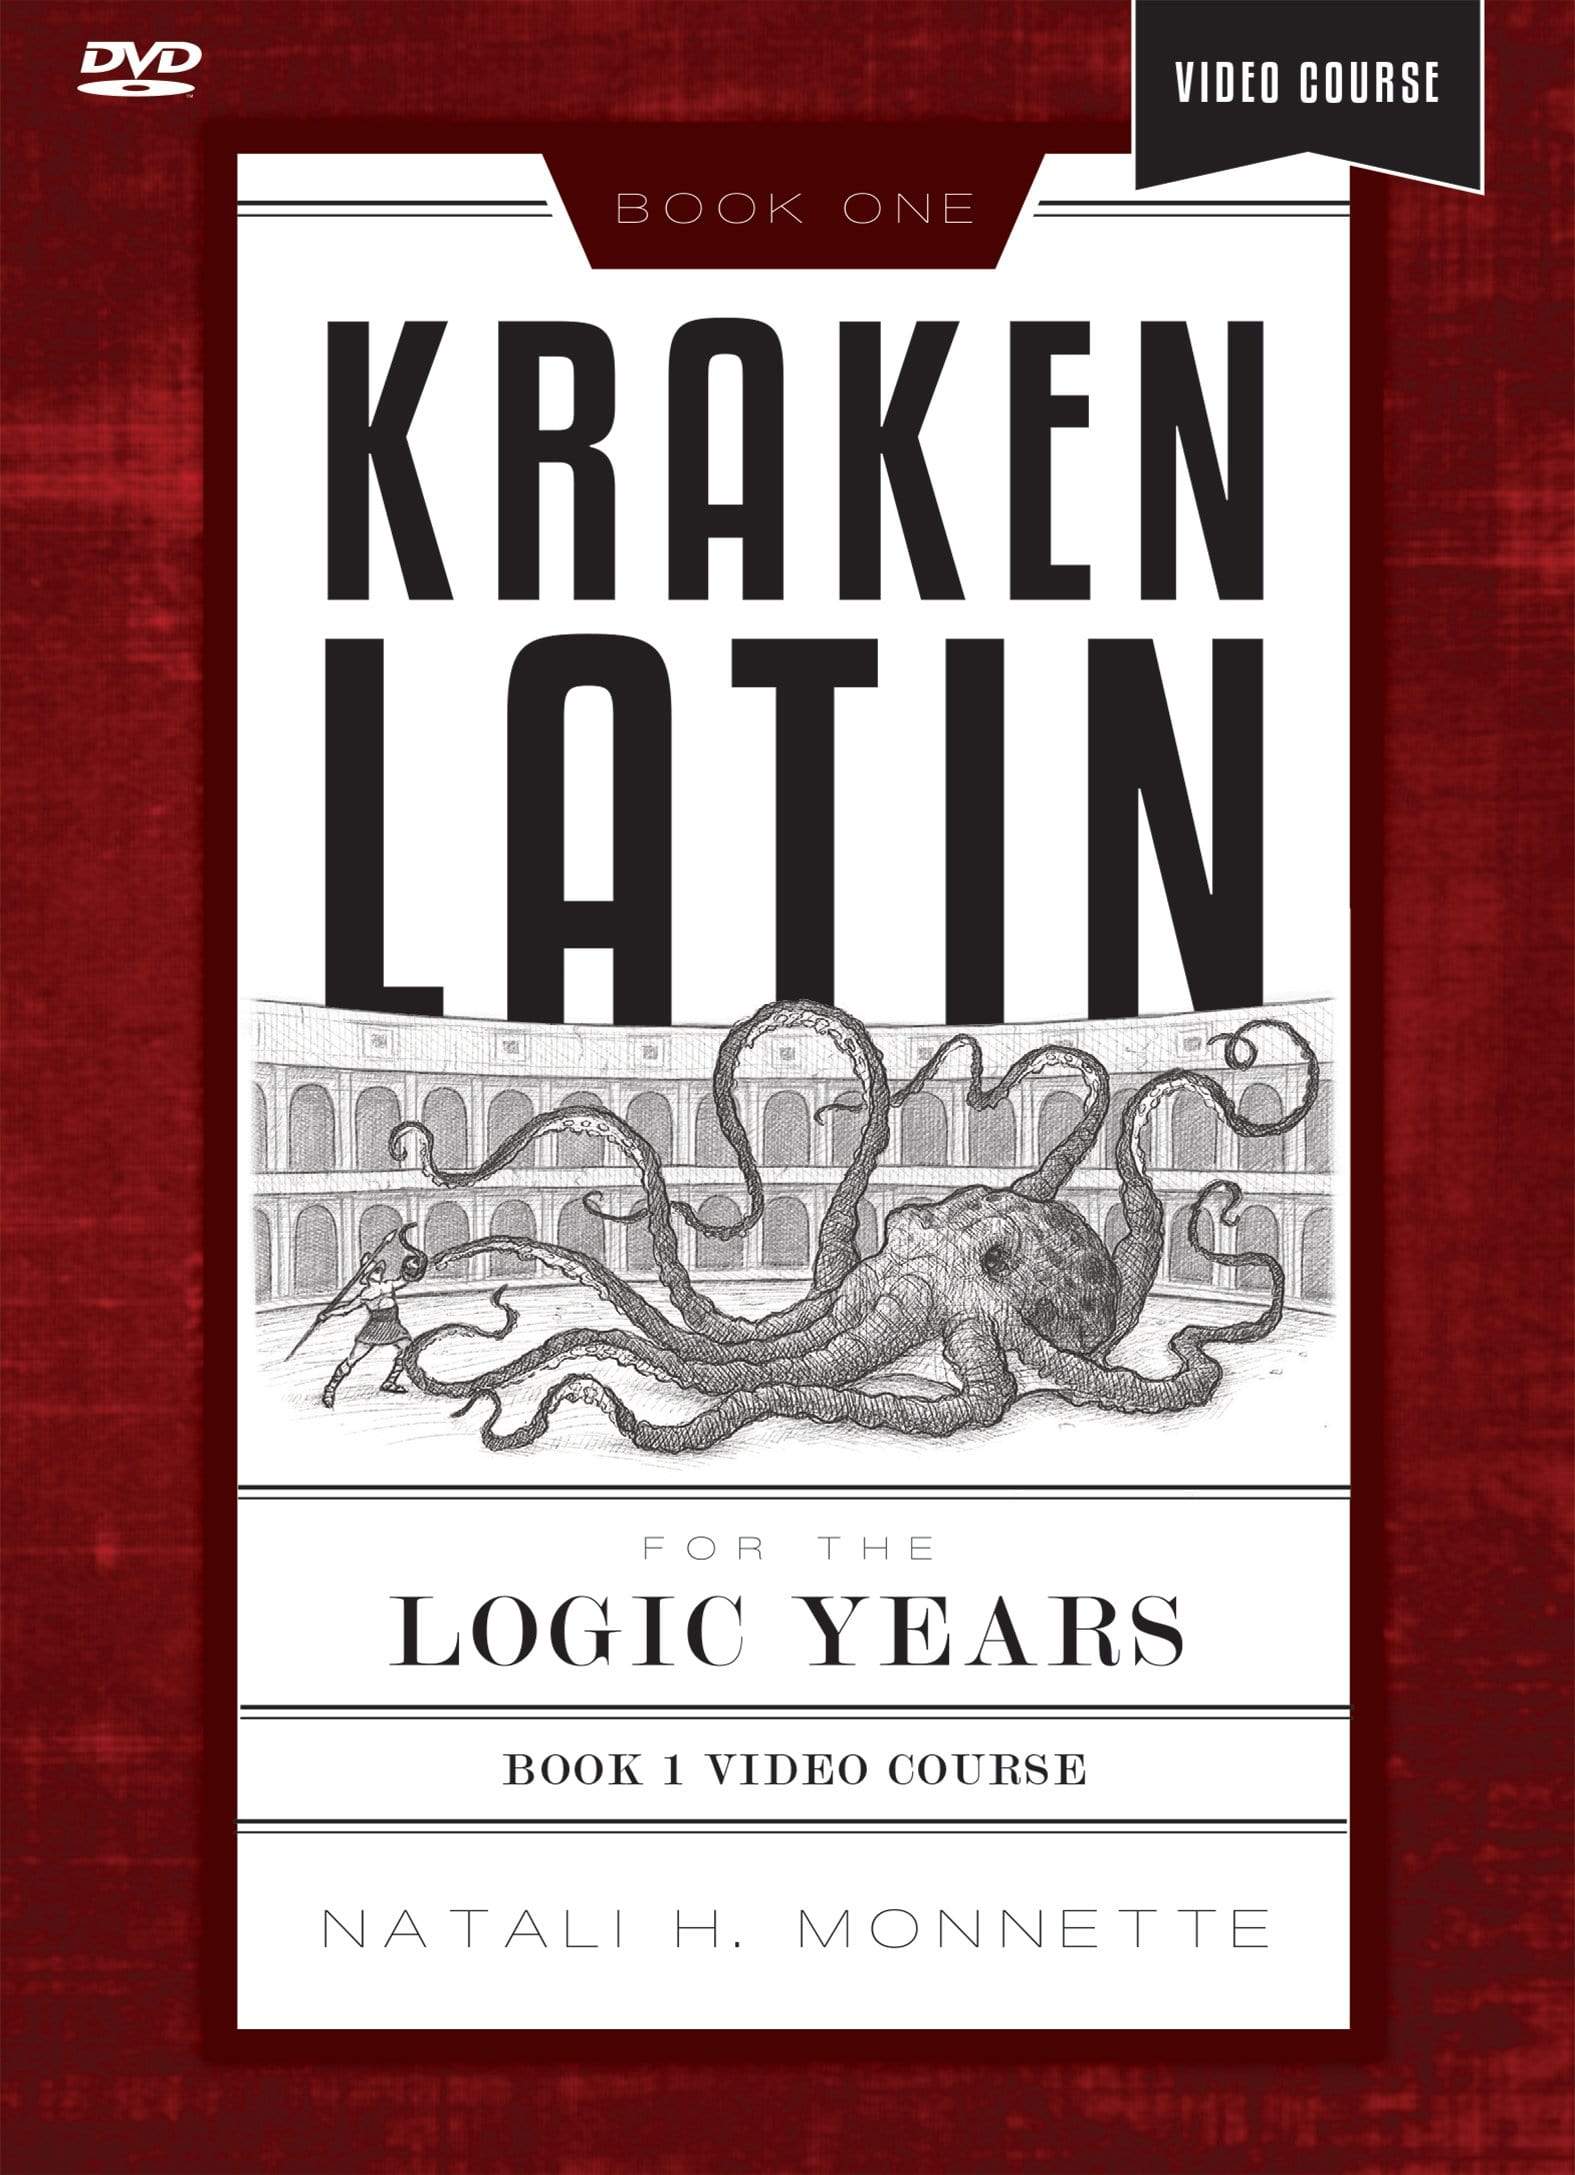 Kraken Latin 1 DVD Course